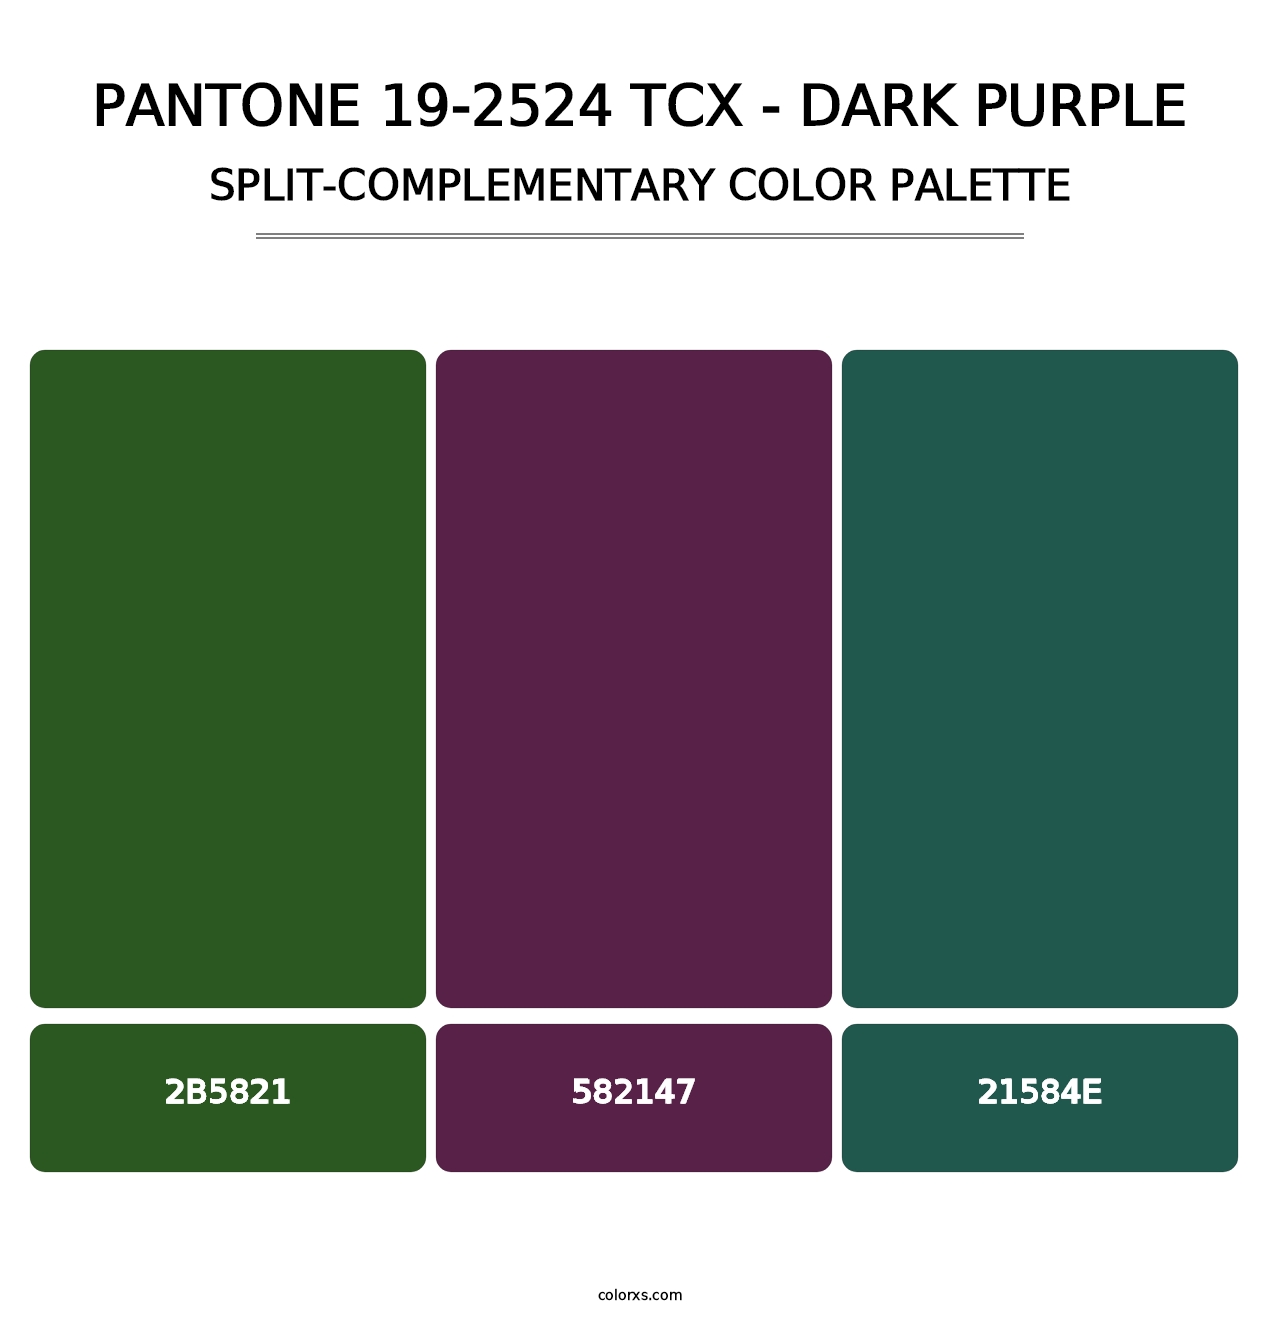 PANTONE 19-2524 TCX - Dark Purple - Split-Complementary Color Palette